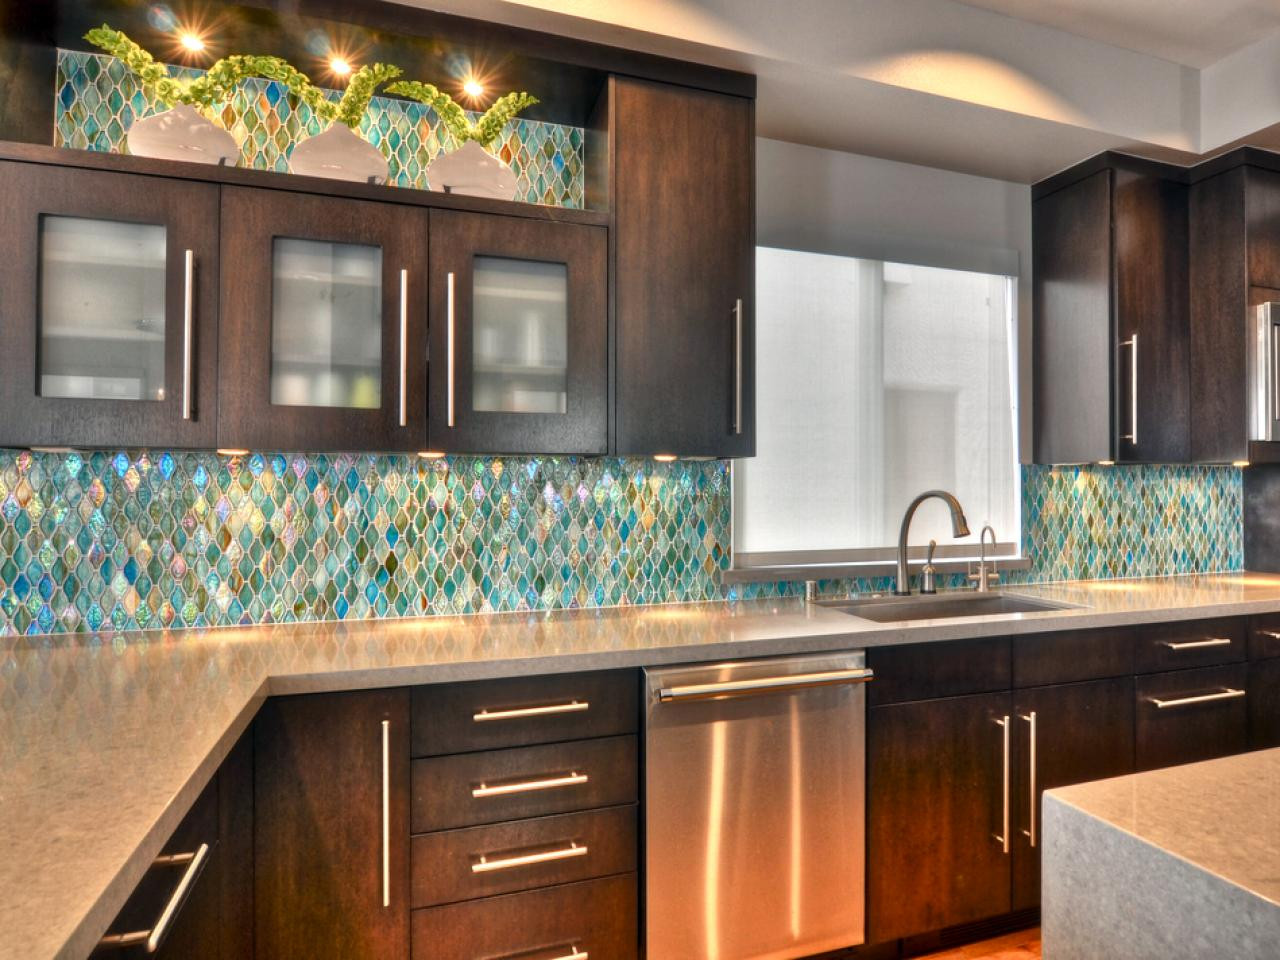 Kitchen Backsplash Designs Ideas
 75 Kitchen Backsplash Ideas for 2020 Tile Glass Metal etc